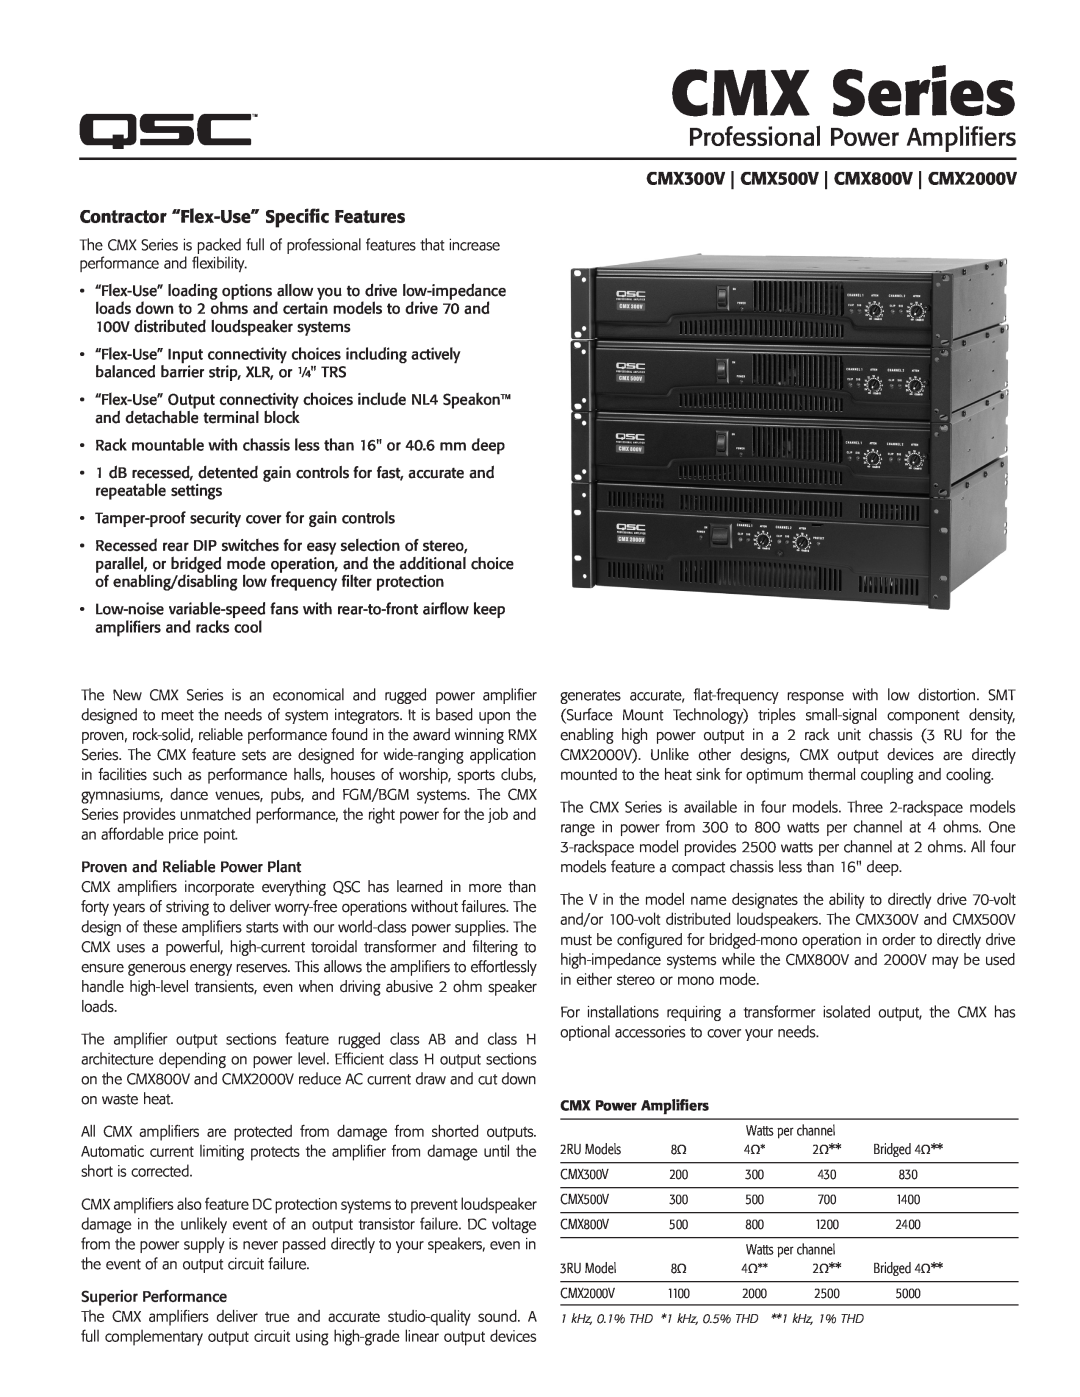 QSC Audio manual Contractor “Flex-Use” Specific Features, CMX300V CMX500V CMX800V CMX2000V, CMX Series 